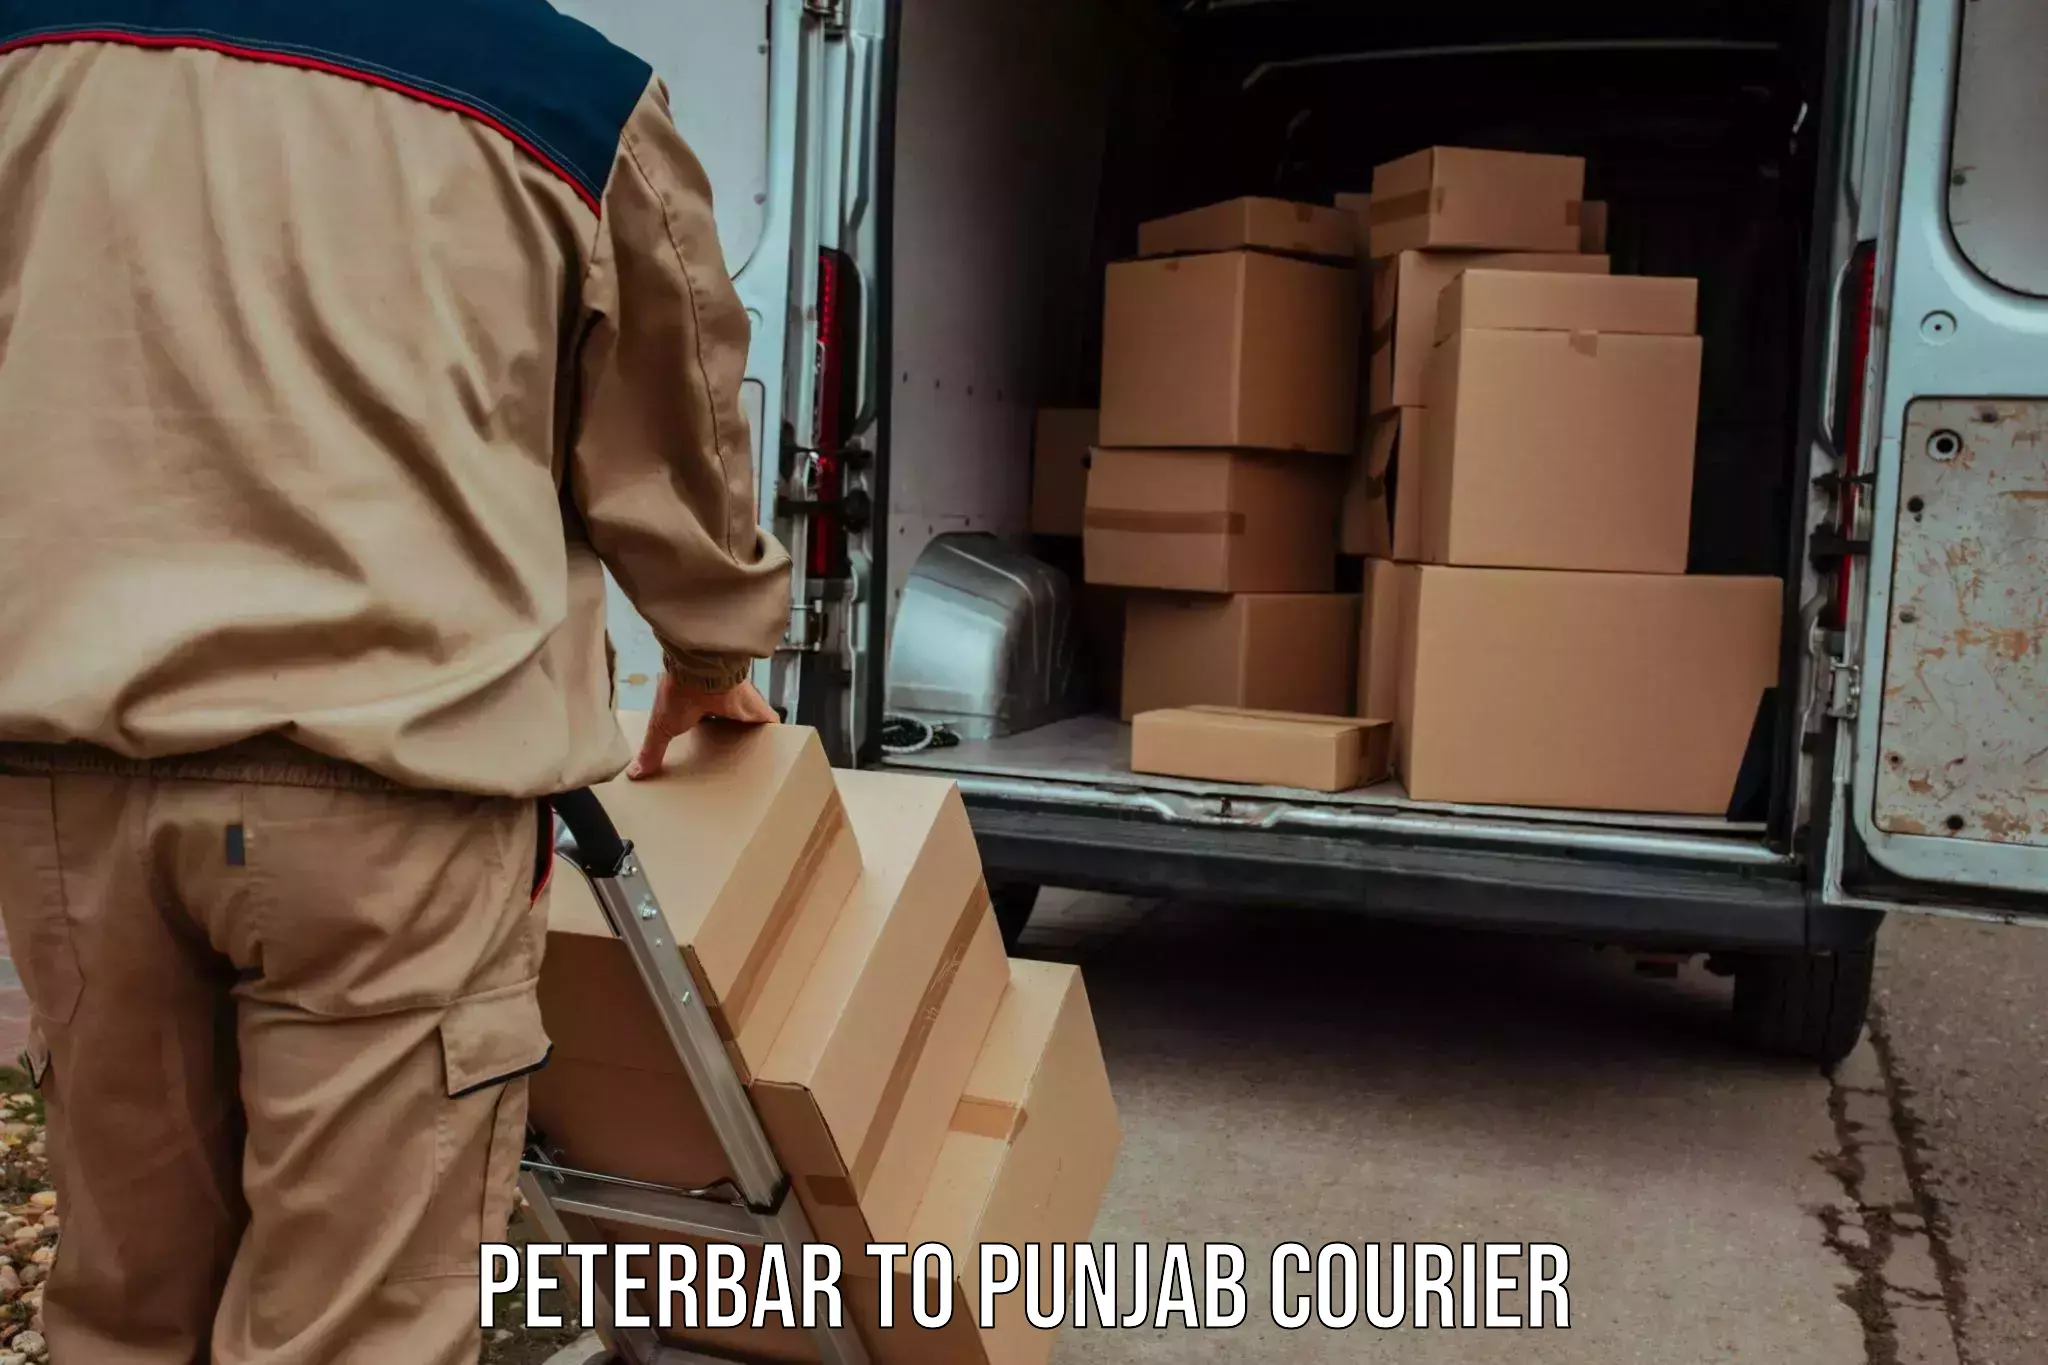 Rapid freight solutions Peterbar to Punjab